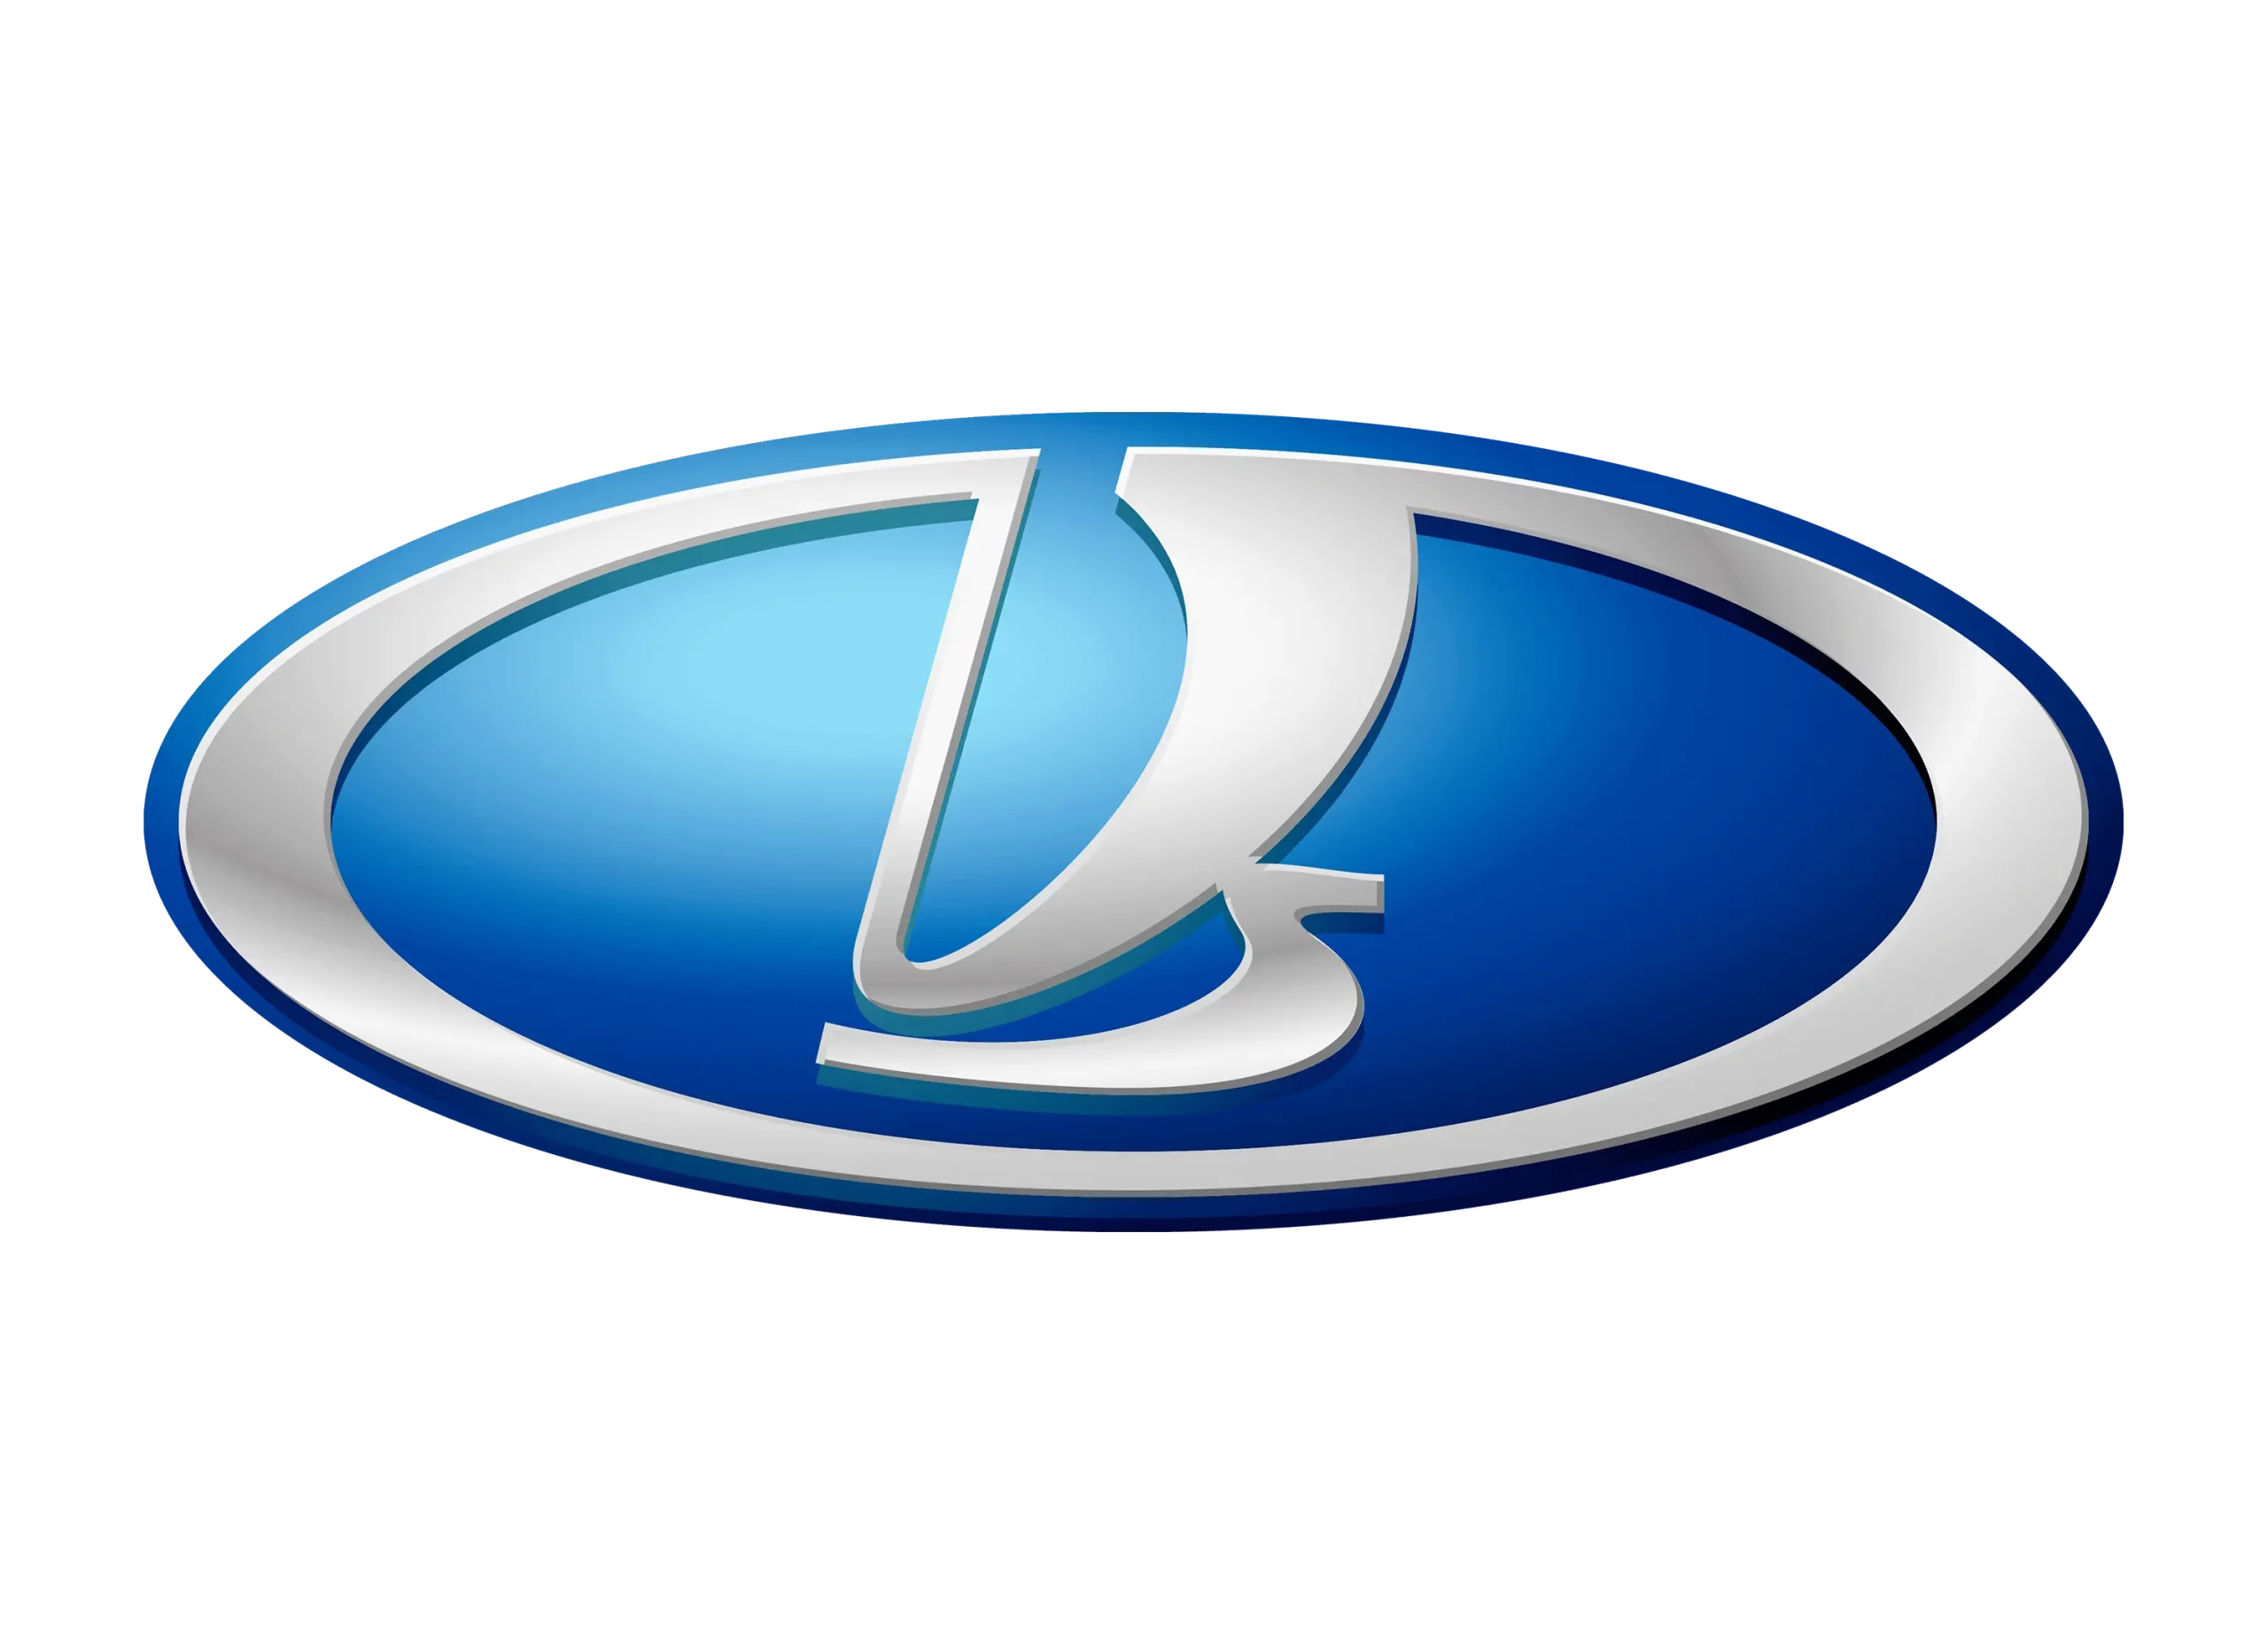 Lada logo 2007-2015